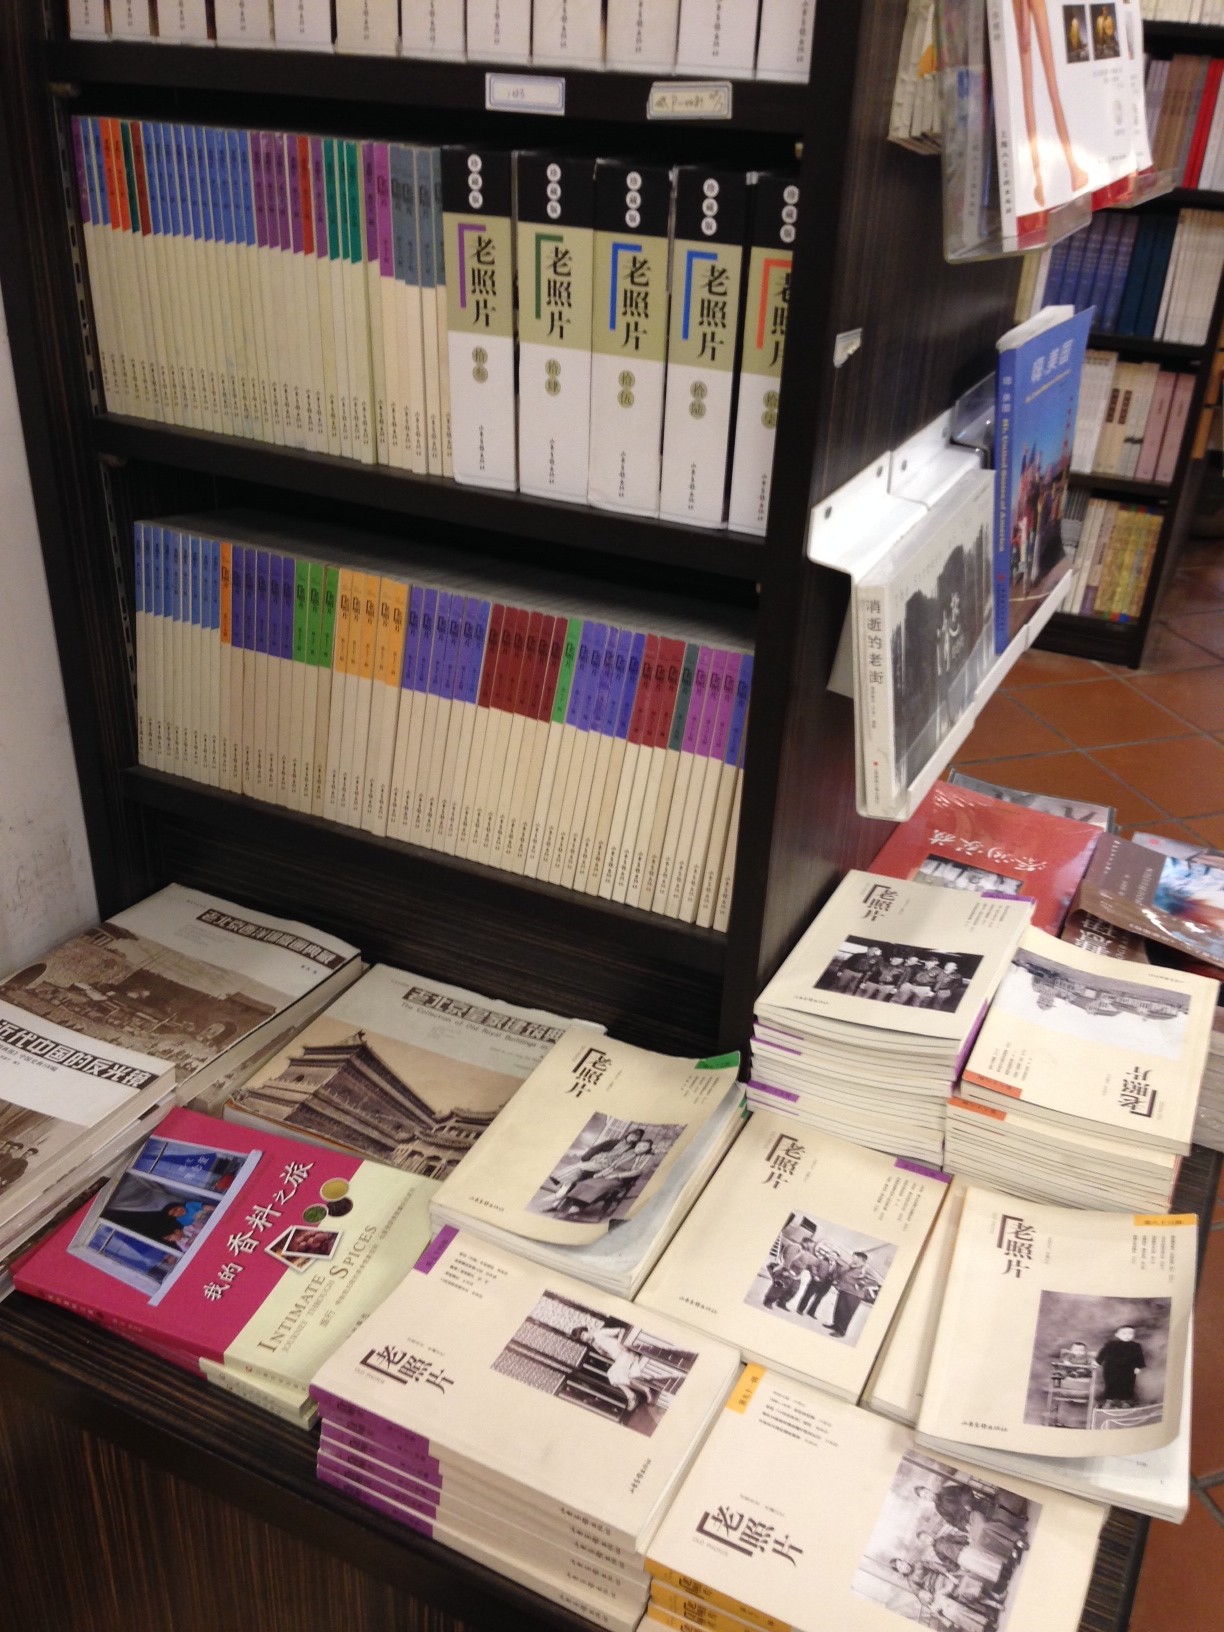 Copies of the magazine Lao zhaopian (Old Photographs) in a Fuzhou road bookstore, Shanghai, Feburary 2014